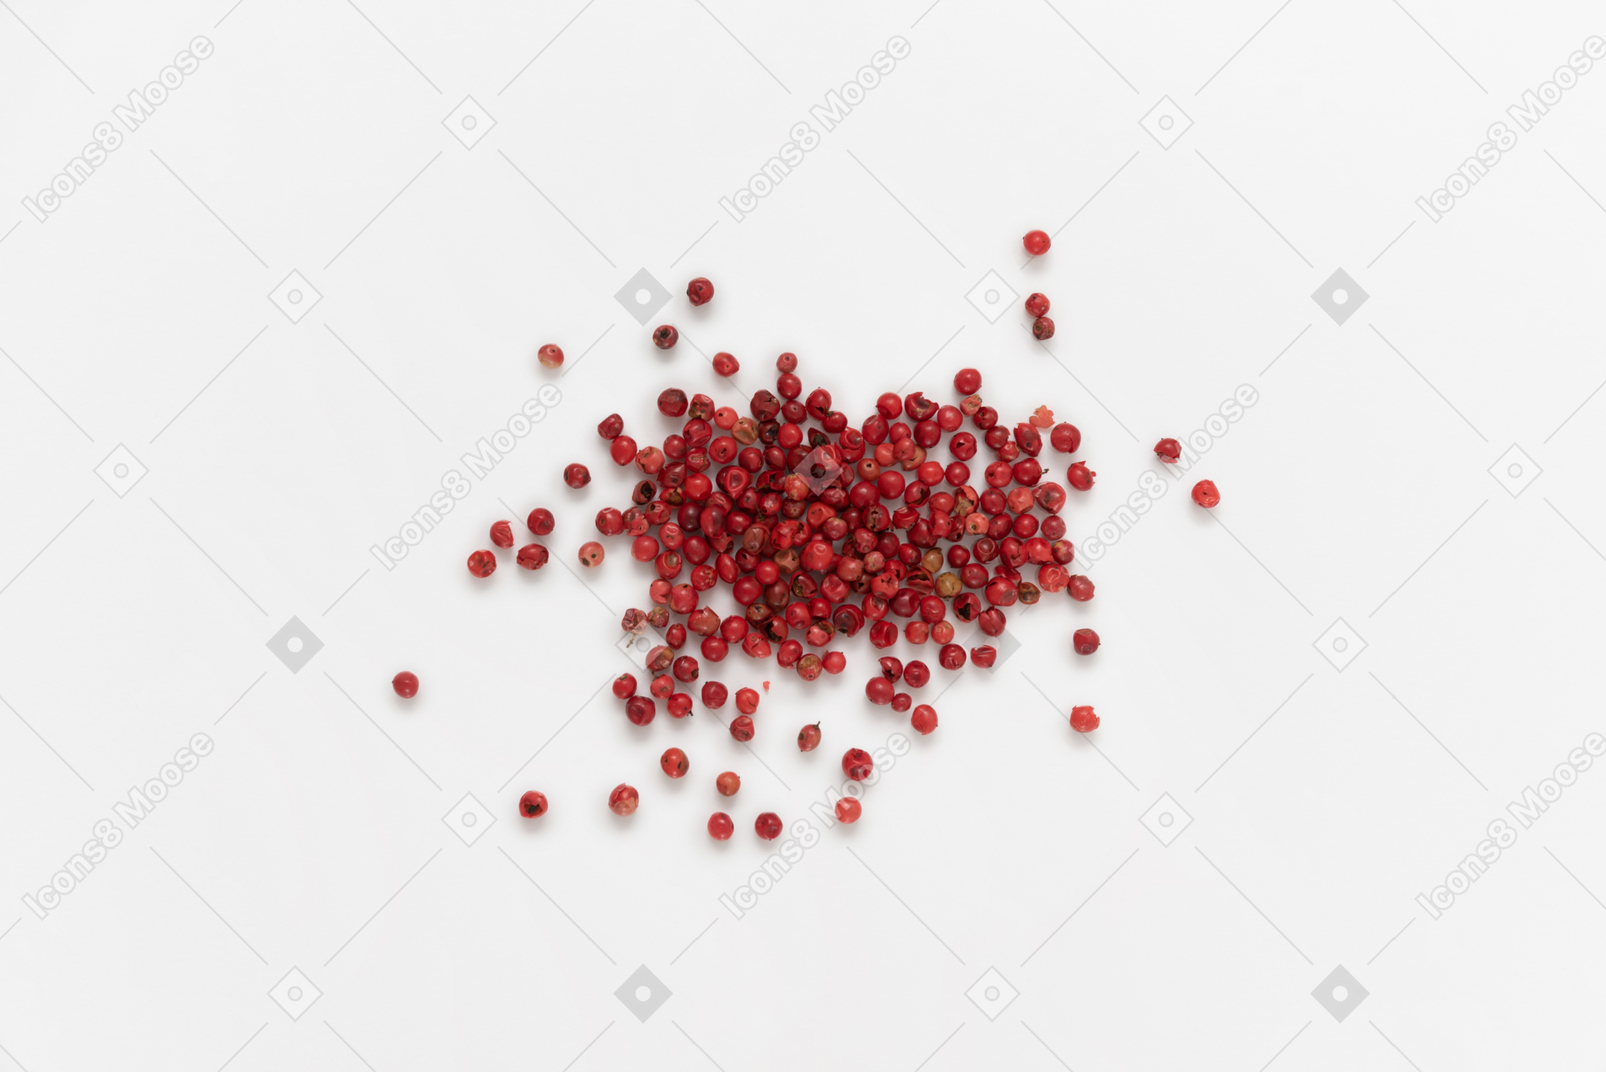 Grapefruit seeds on white background